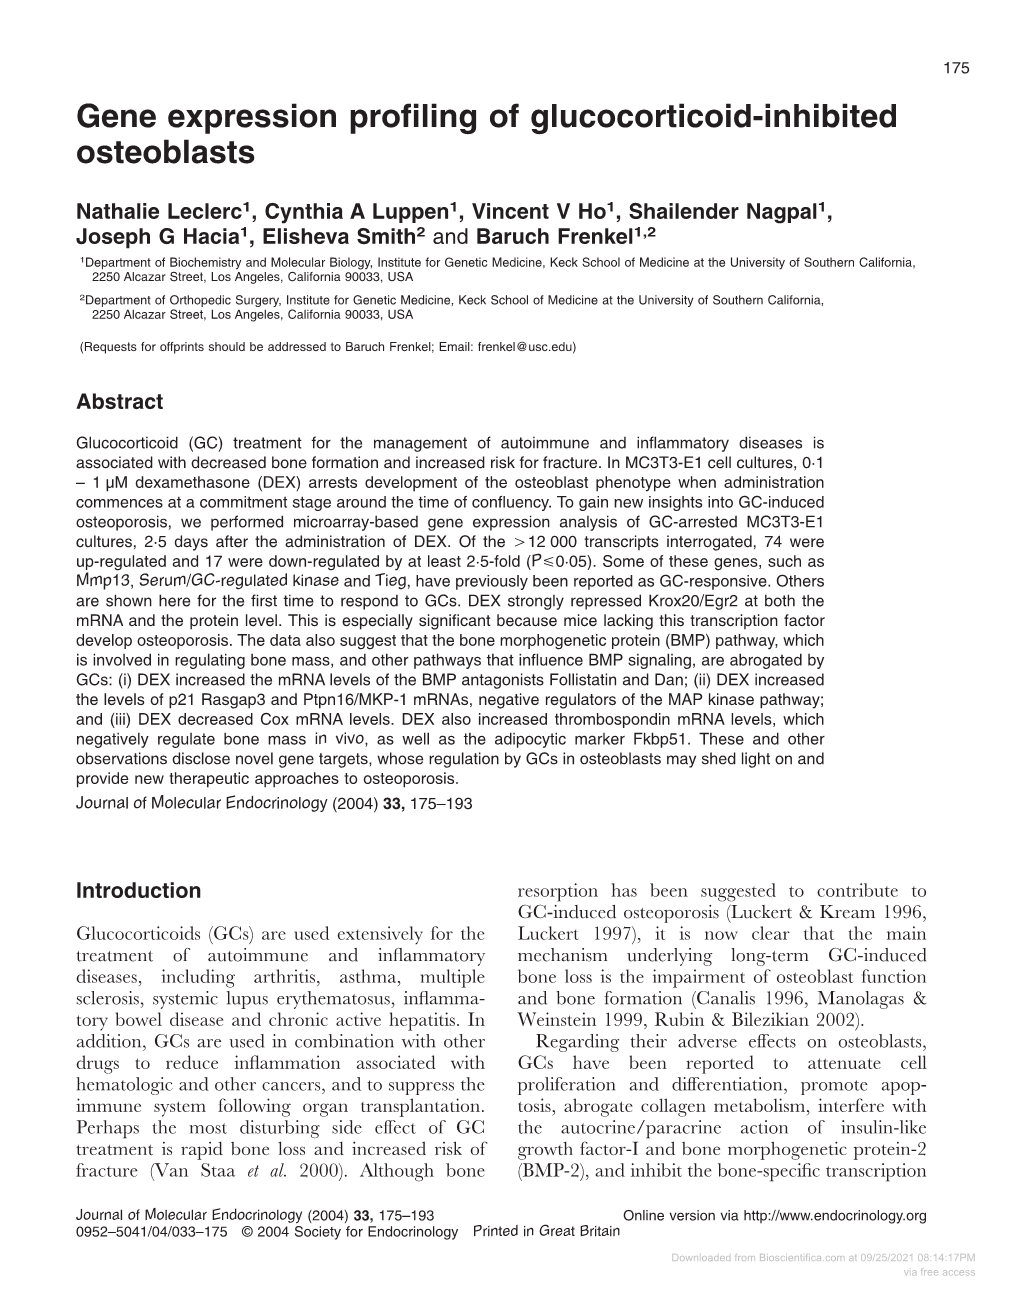 Gene Expression Profiling of Glucocorticoid-Inhibited Osteoblasts